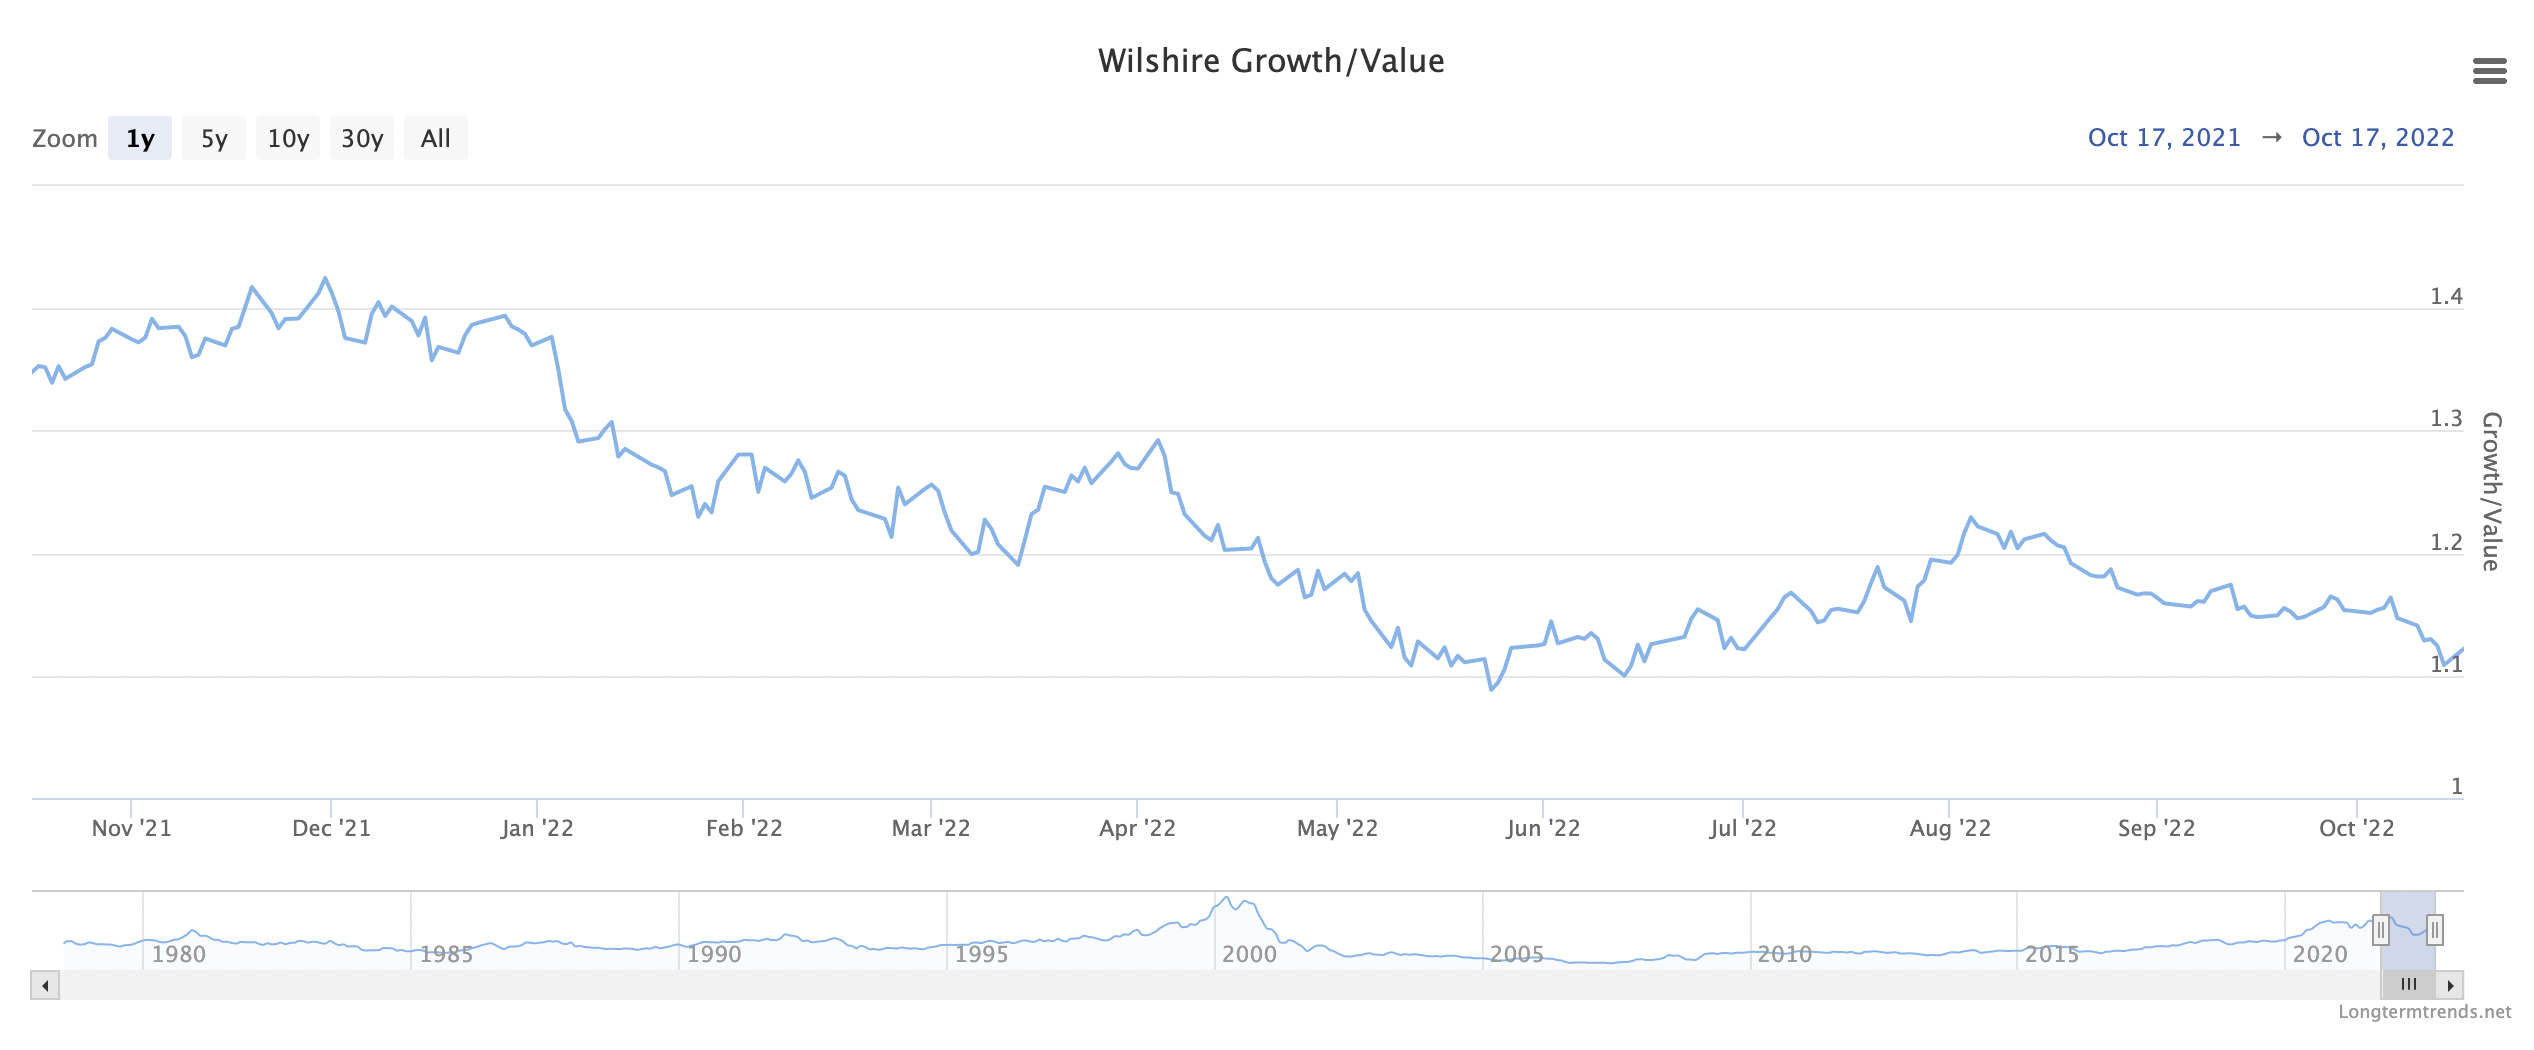 Wilshire Growth / Value (Source: LongTermTrends.Net)